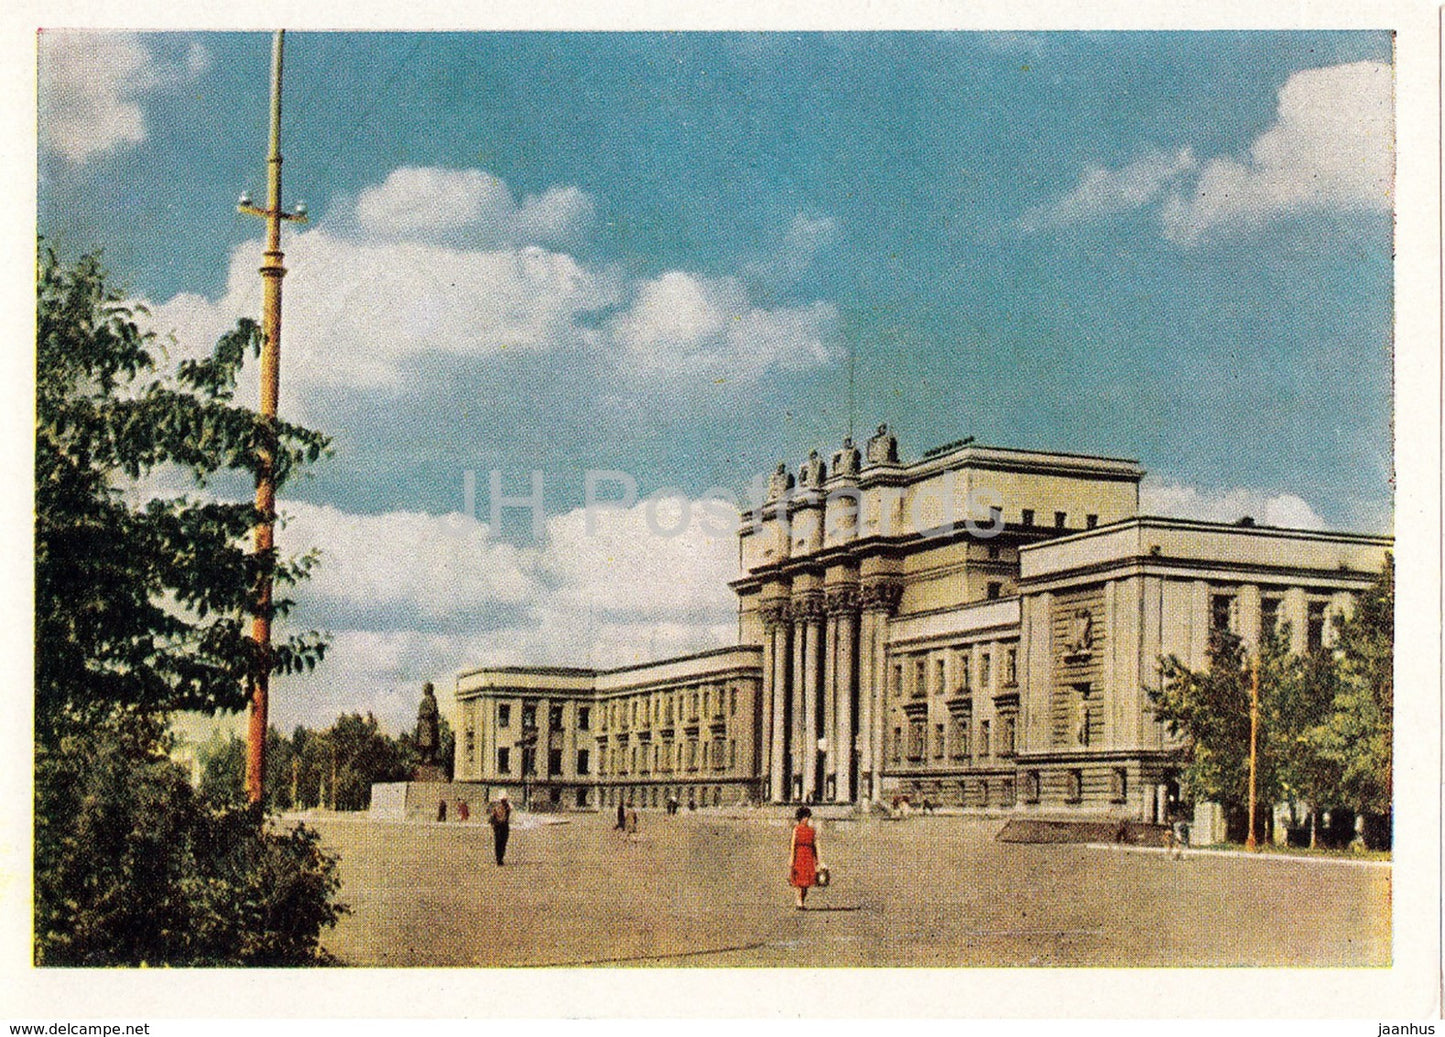 Samara - Kuybyshev - Kuybyshev Palace of Sports - old postcard - 1964 - Russia USSR - unused - JH Postcards